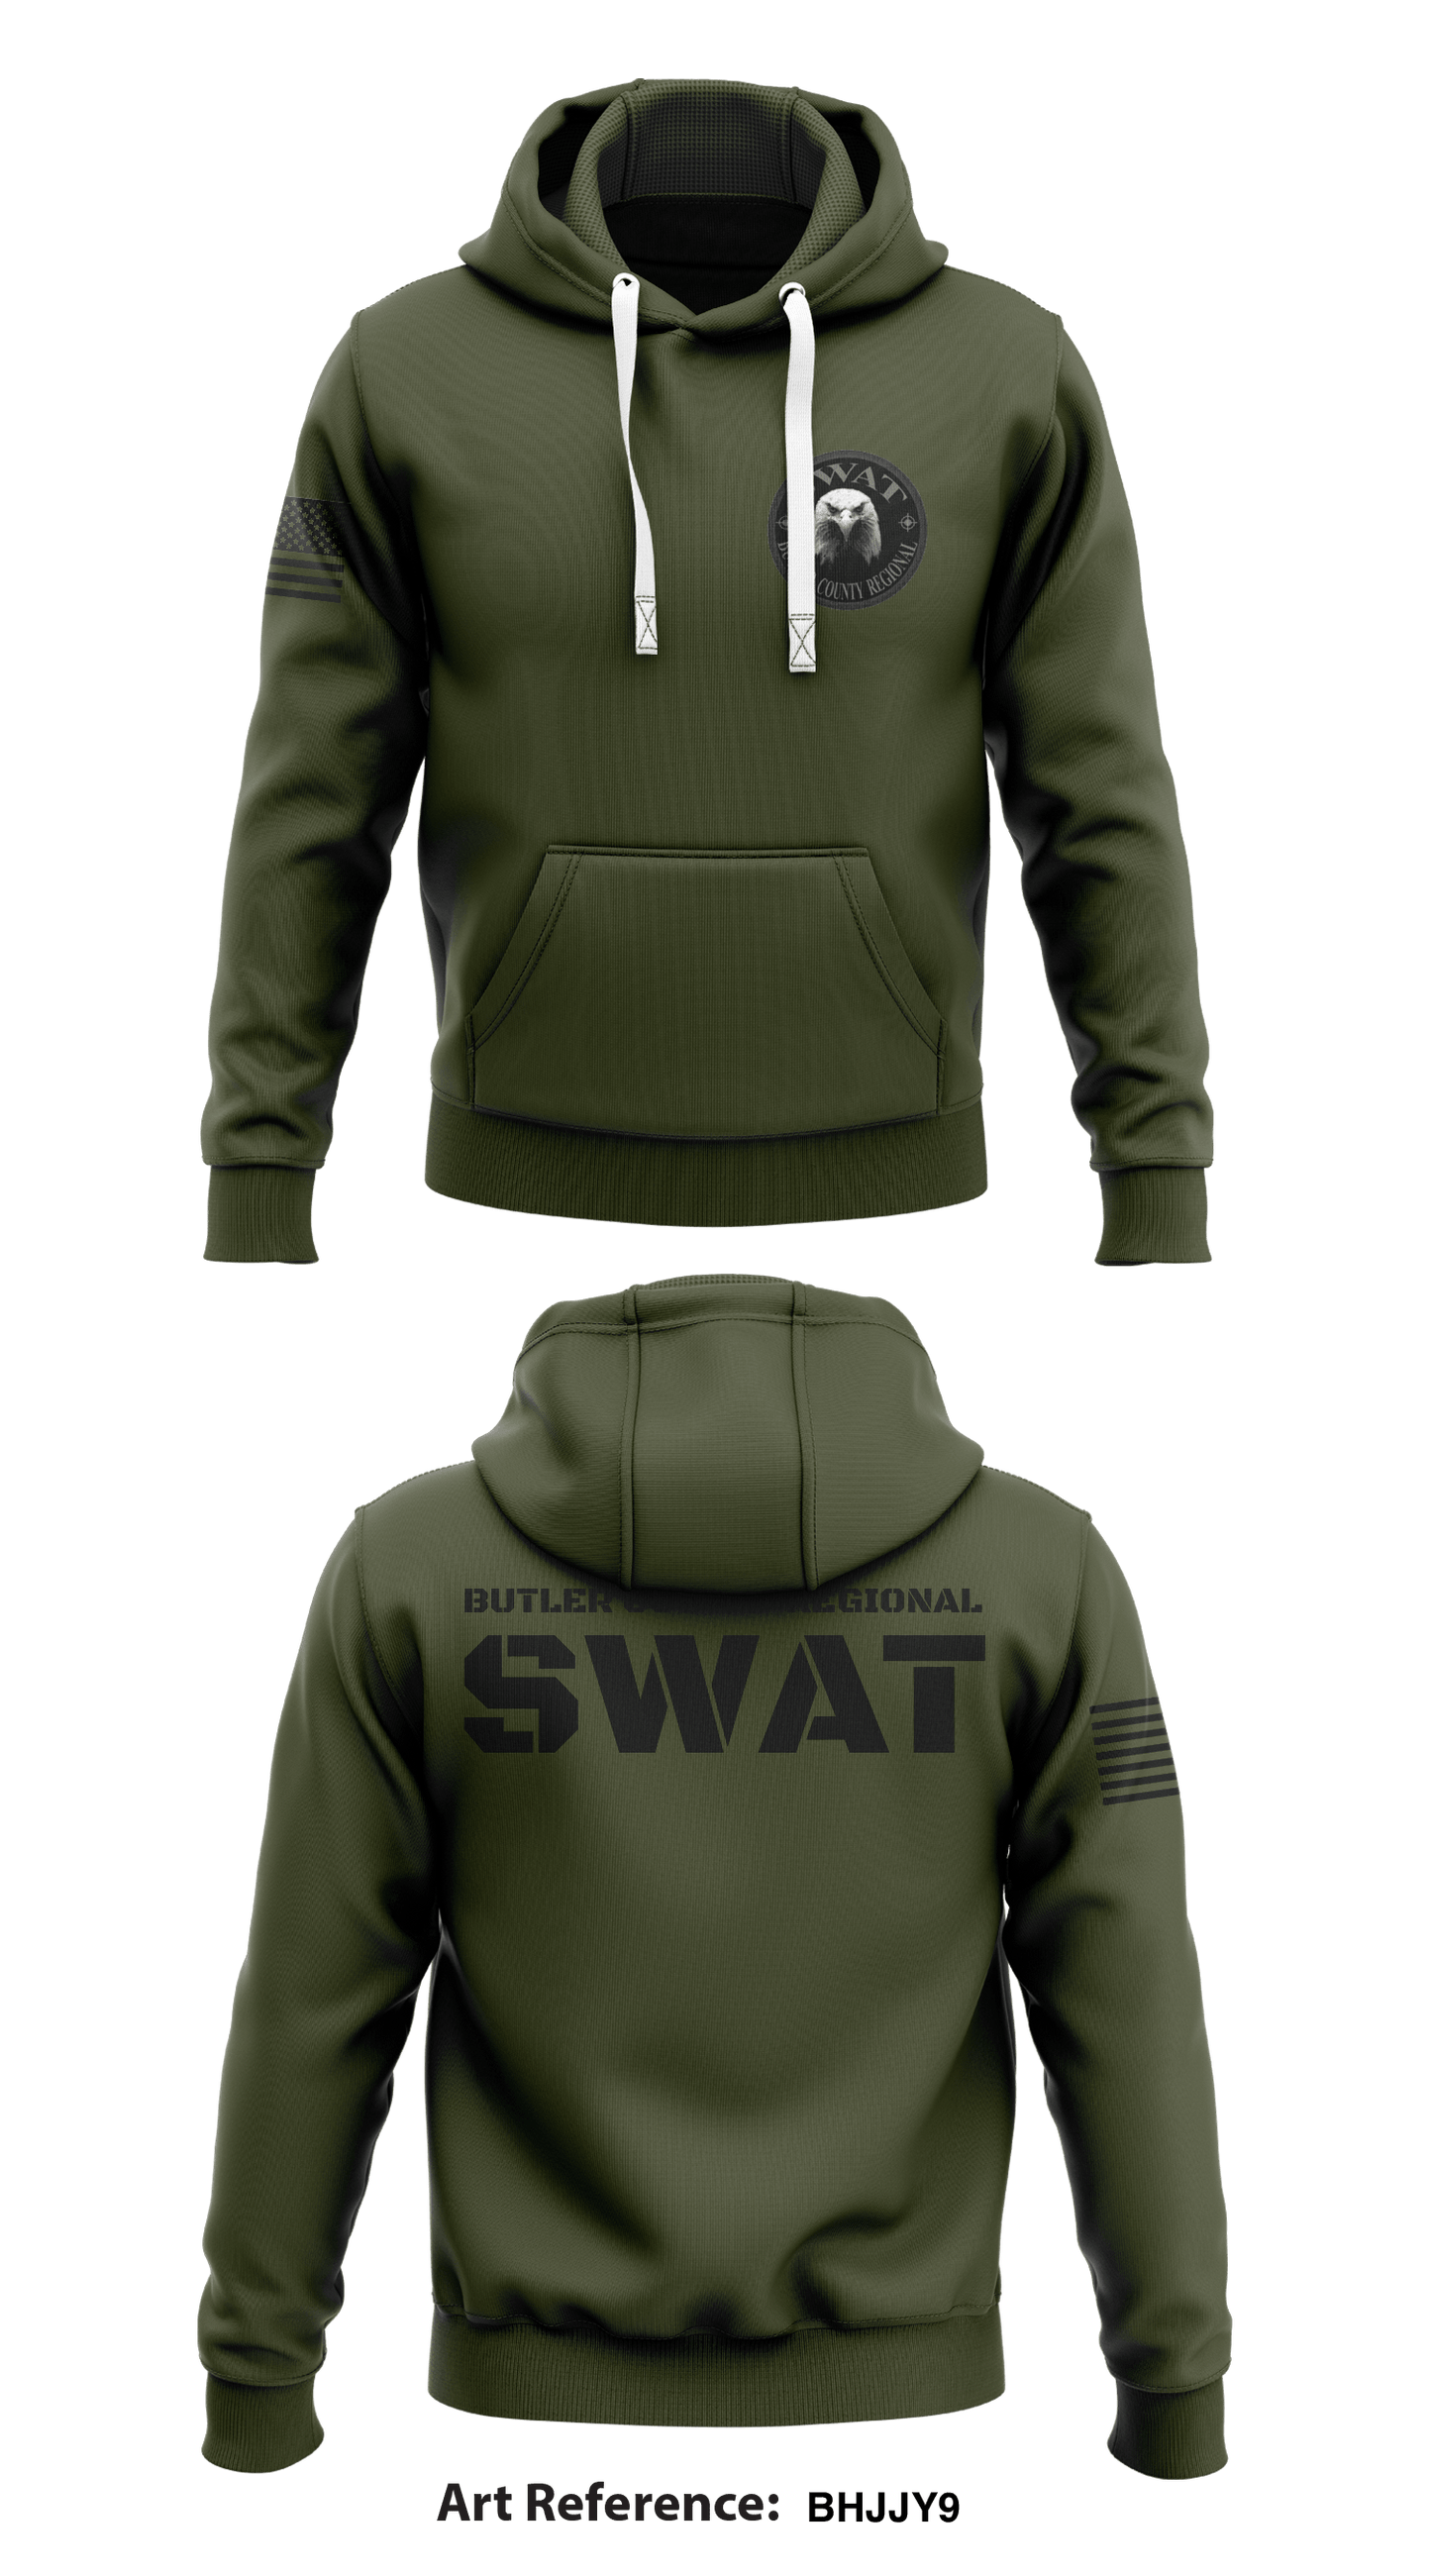 Butler County Regional SWAT  Core Men's Hooded Performance Sweatshirt - Bhjjy9